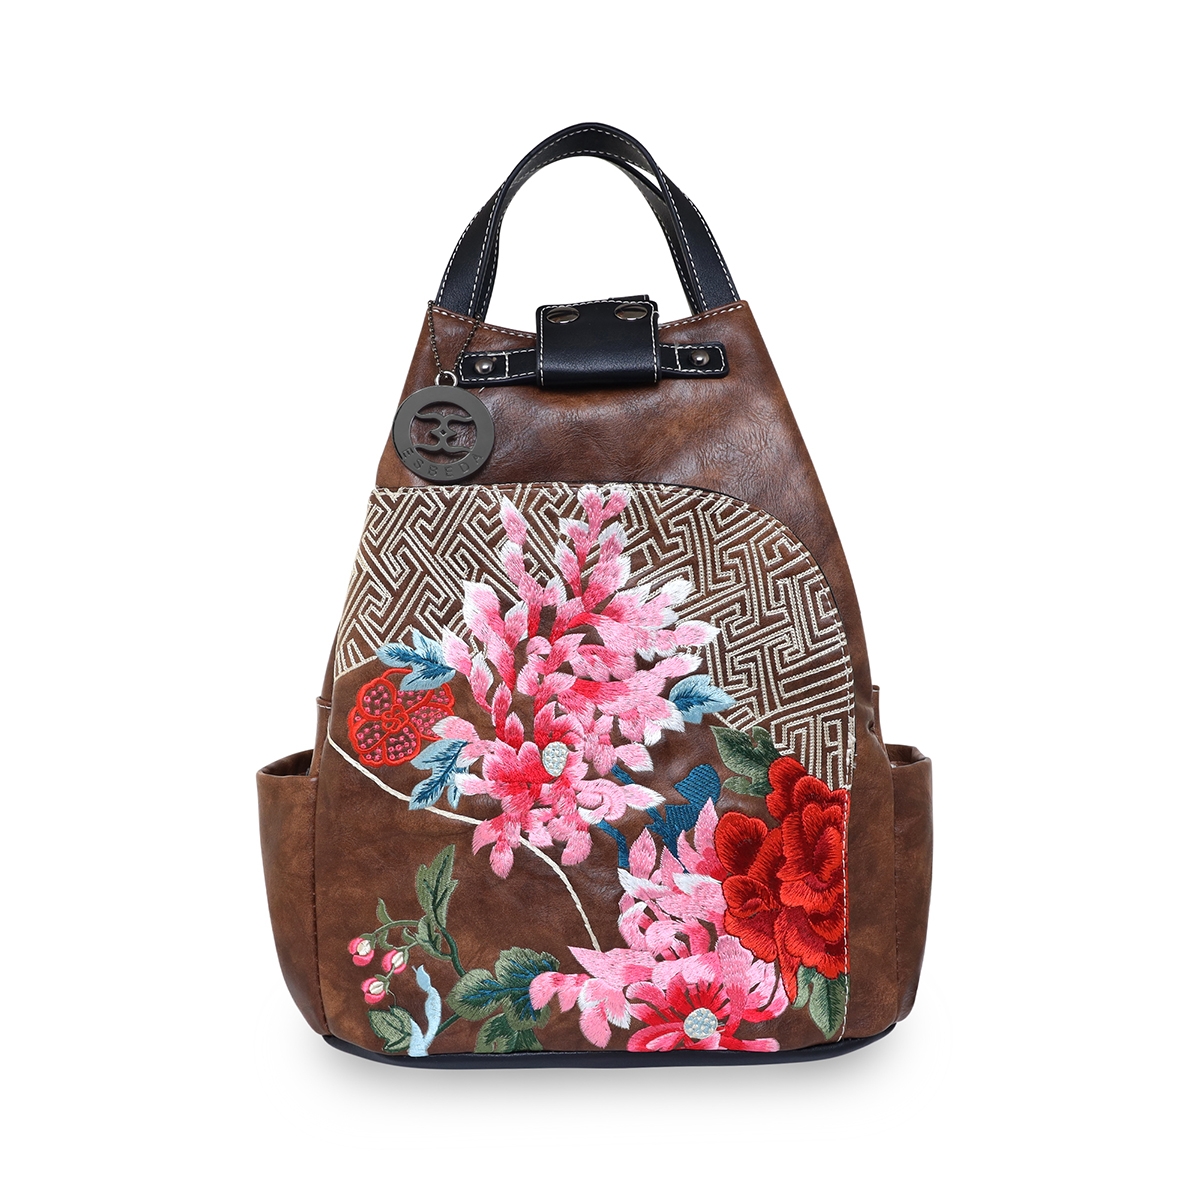 Buy ESBEDA Tan Color Rectangular Embroidery Graphic Handbag For Women-13179  at Amazon.in